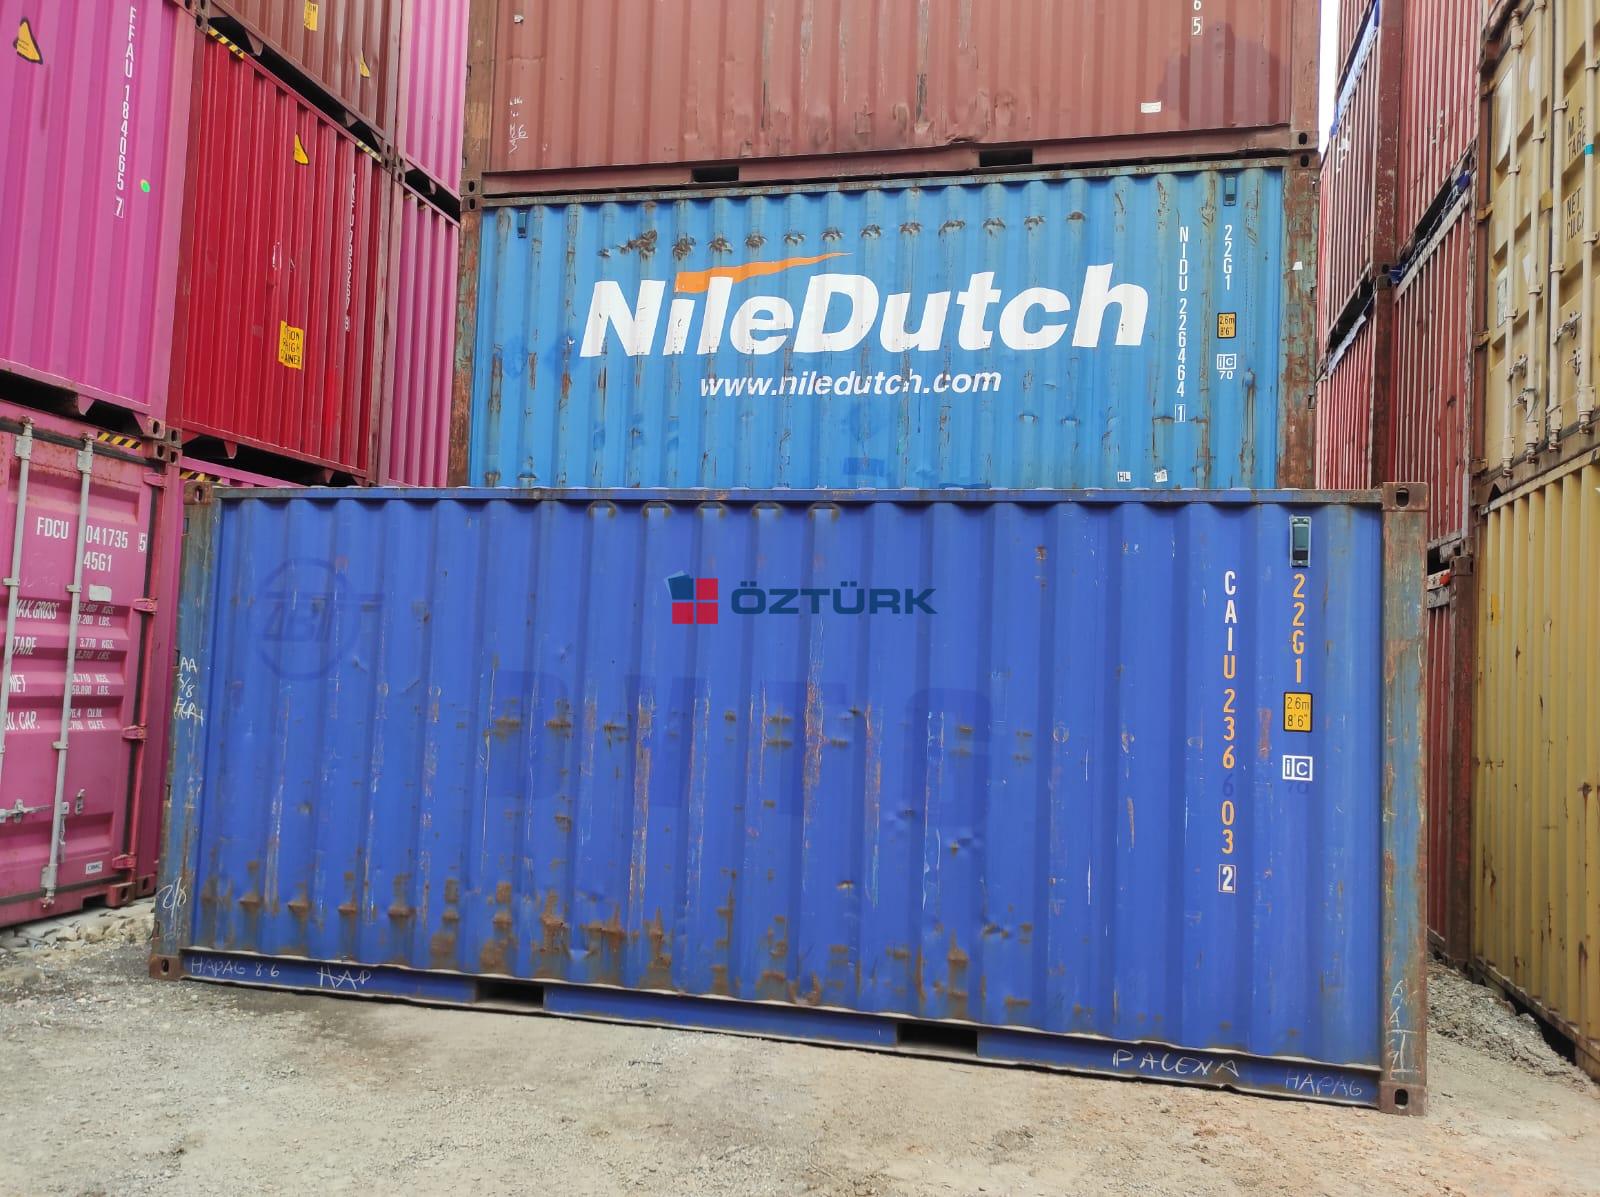 Transit ihracat yk konteynerleri zmir blgesi Kemalpaa ve Aliaa